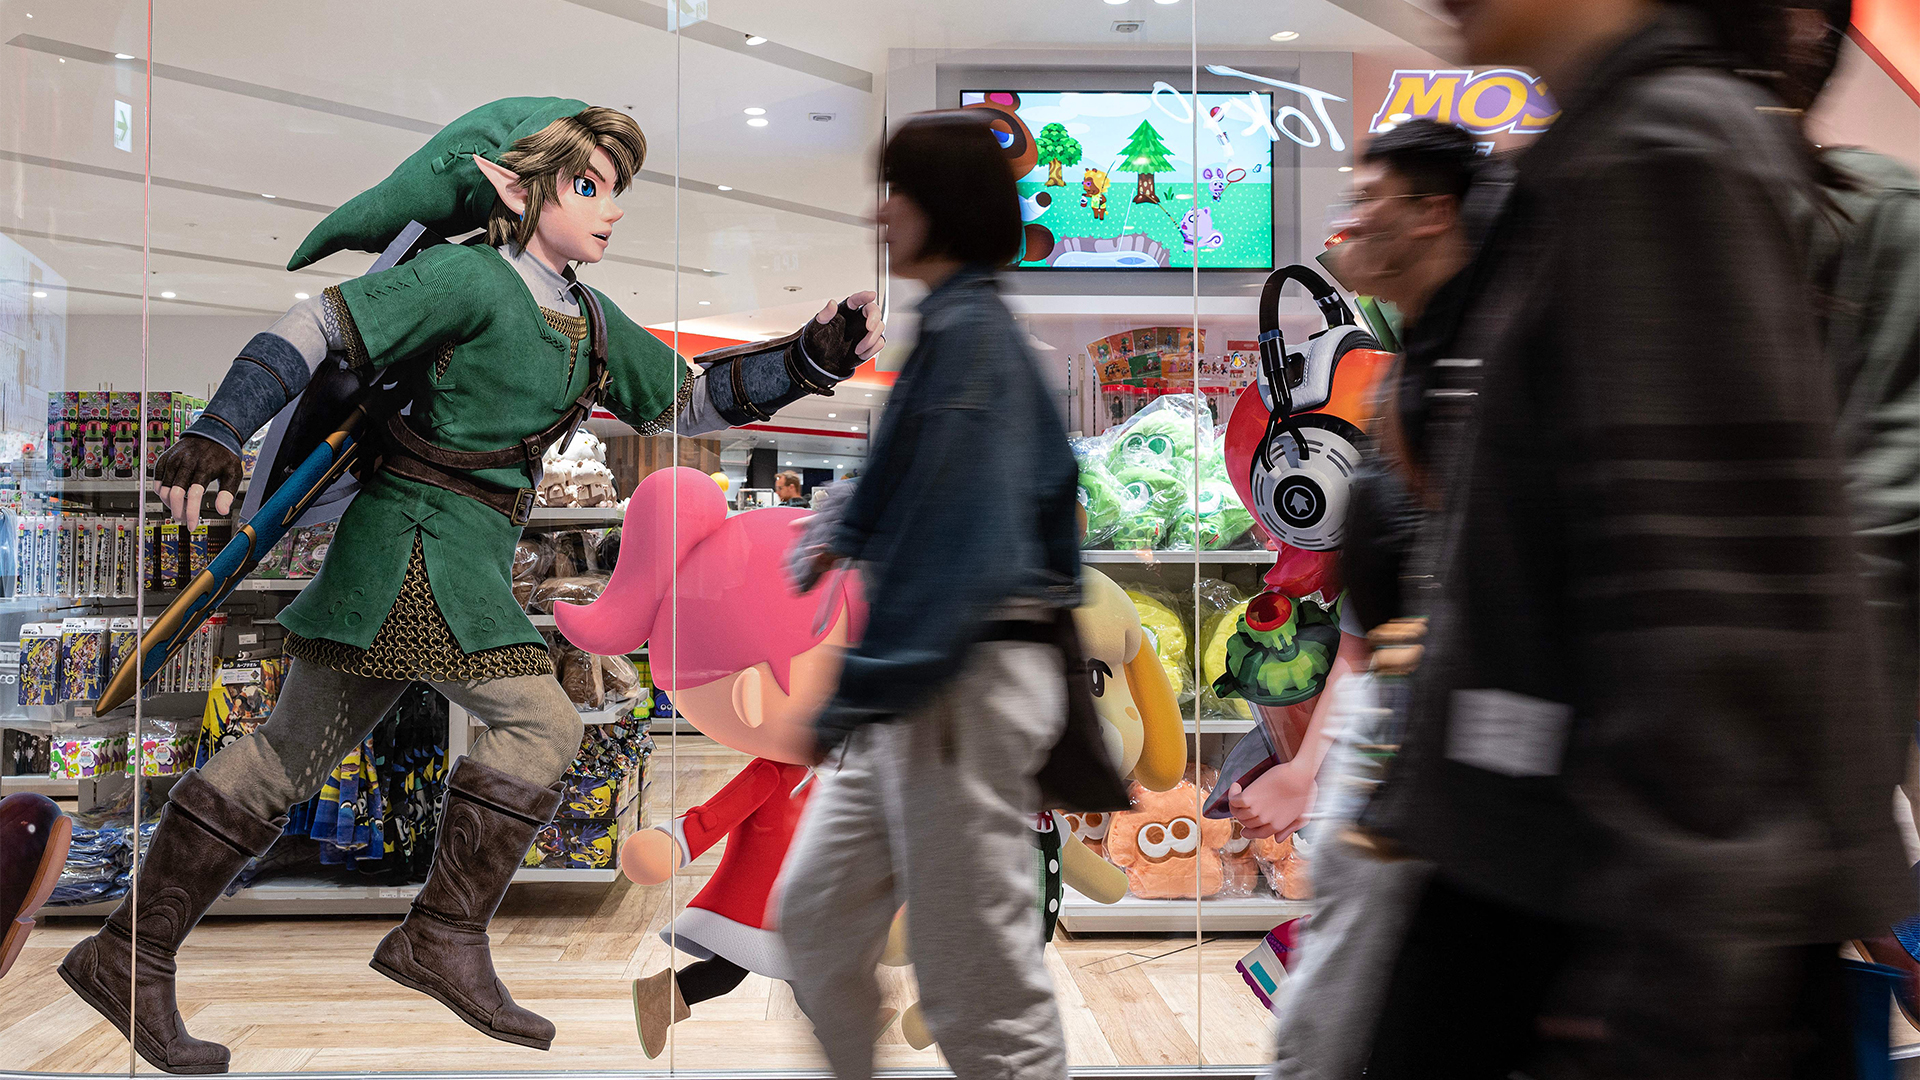 Miyamoto leads fans through Super Nintendo World—and it looks